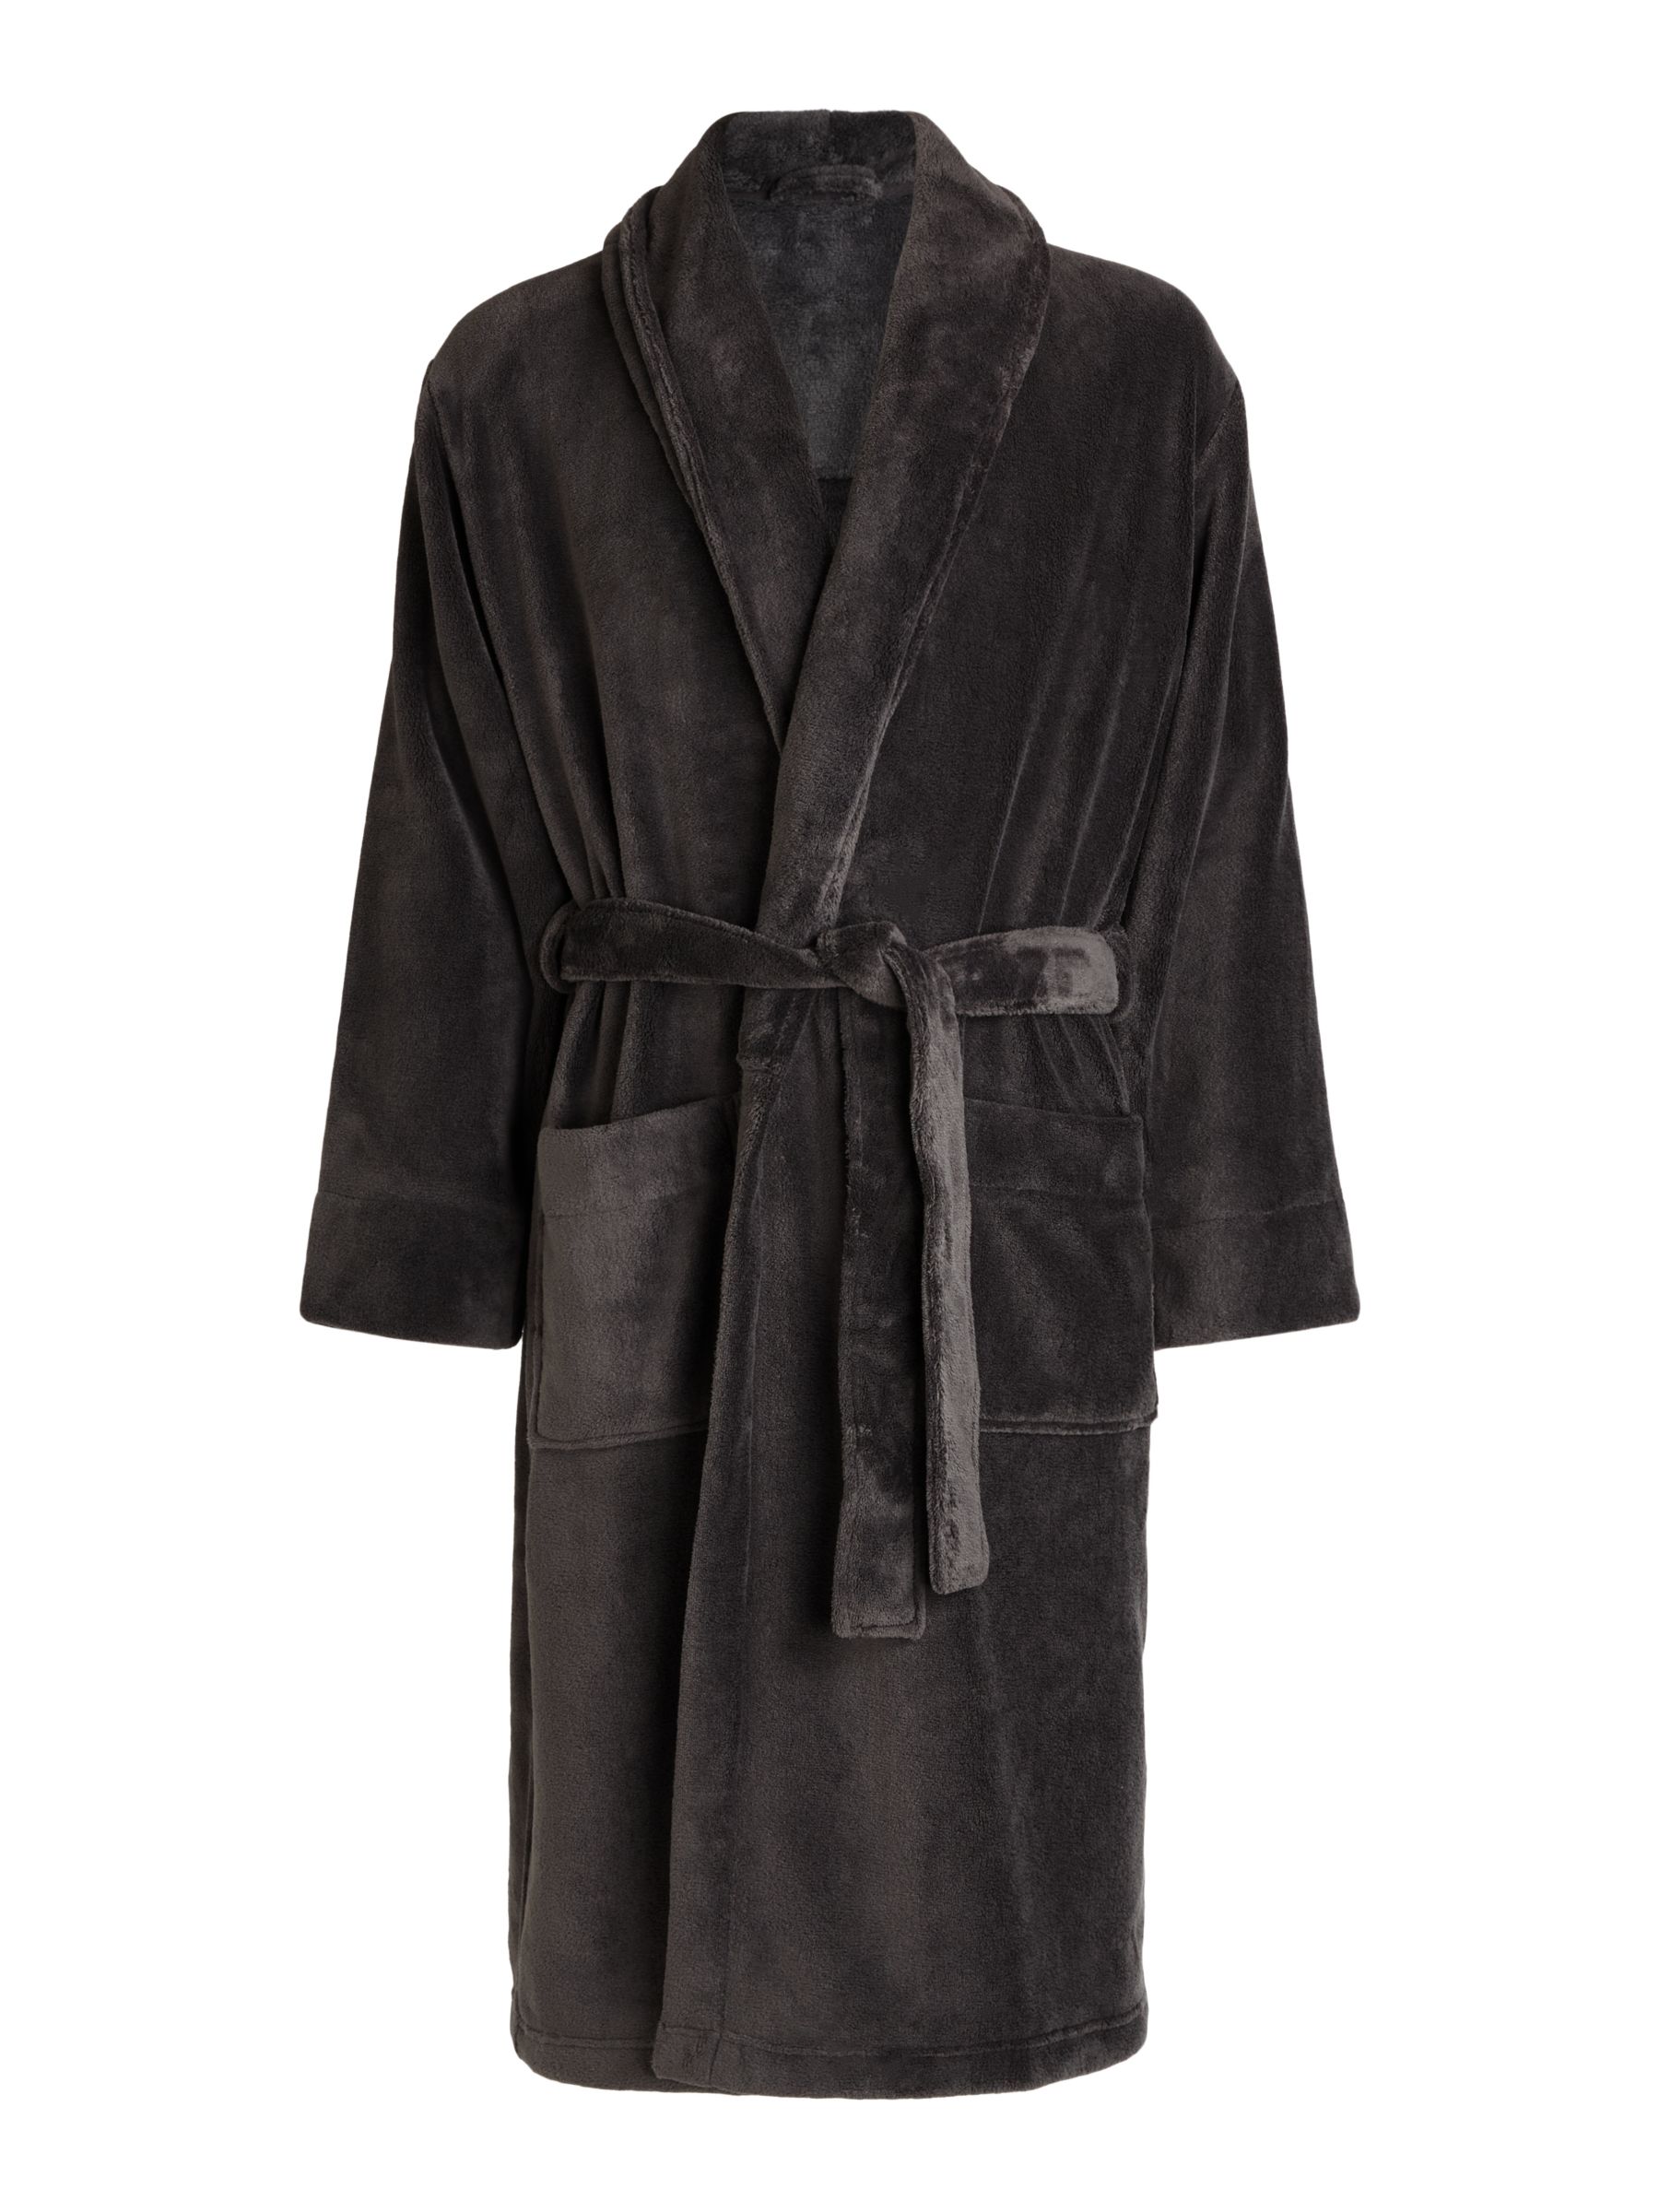 John Lewis Sheared Fleece Robe, Grey, S